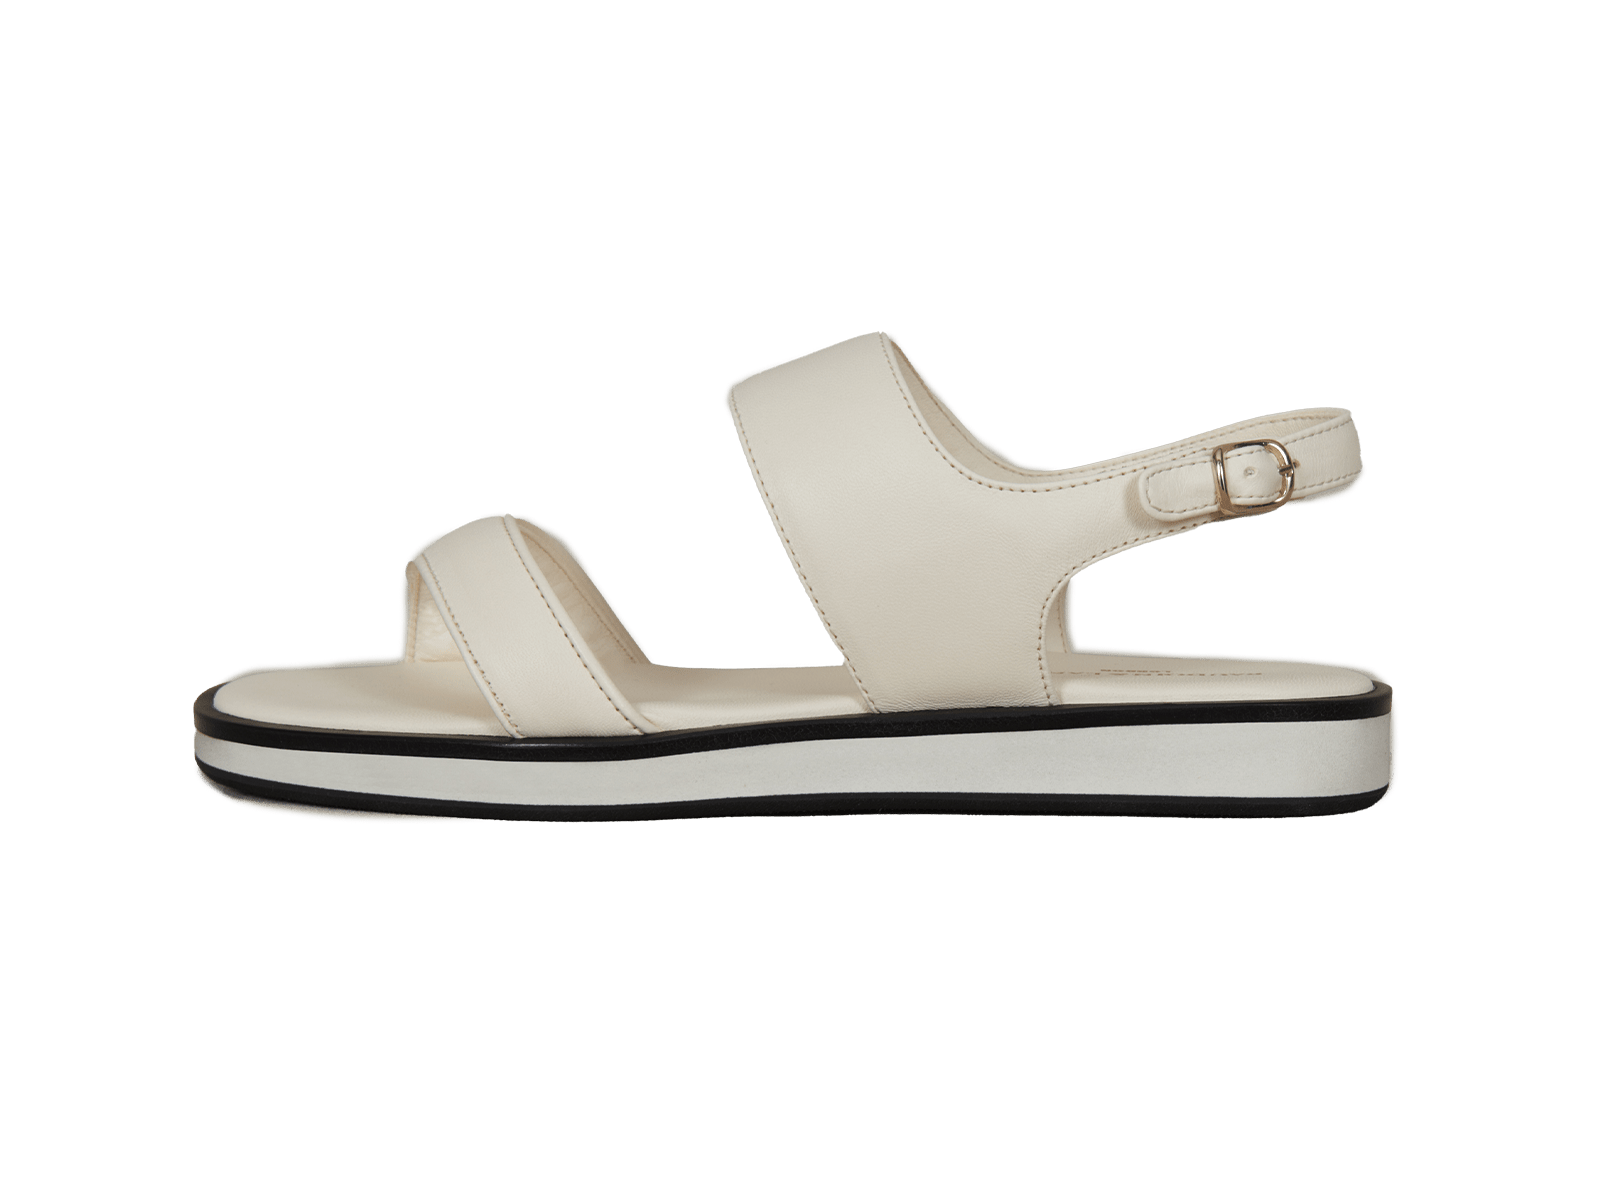 Nuage Sandal in Blanc Casse Nappa